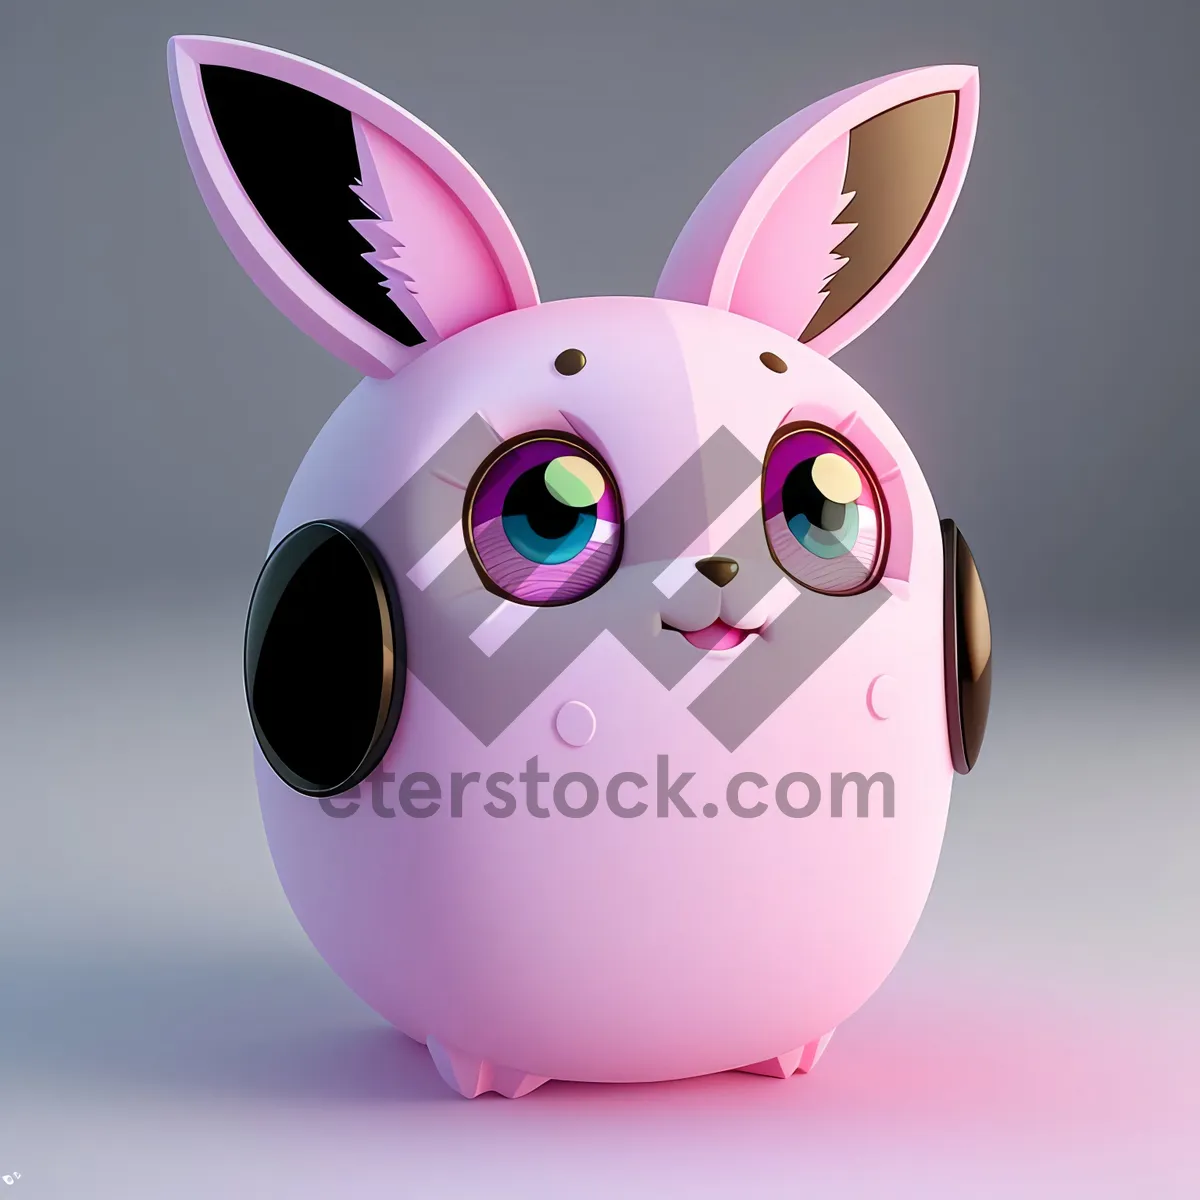 Picture of Pink Ceramic Piggy Bank - Money Saving Symbol